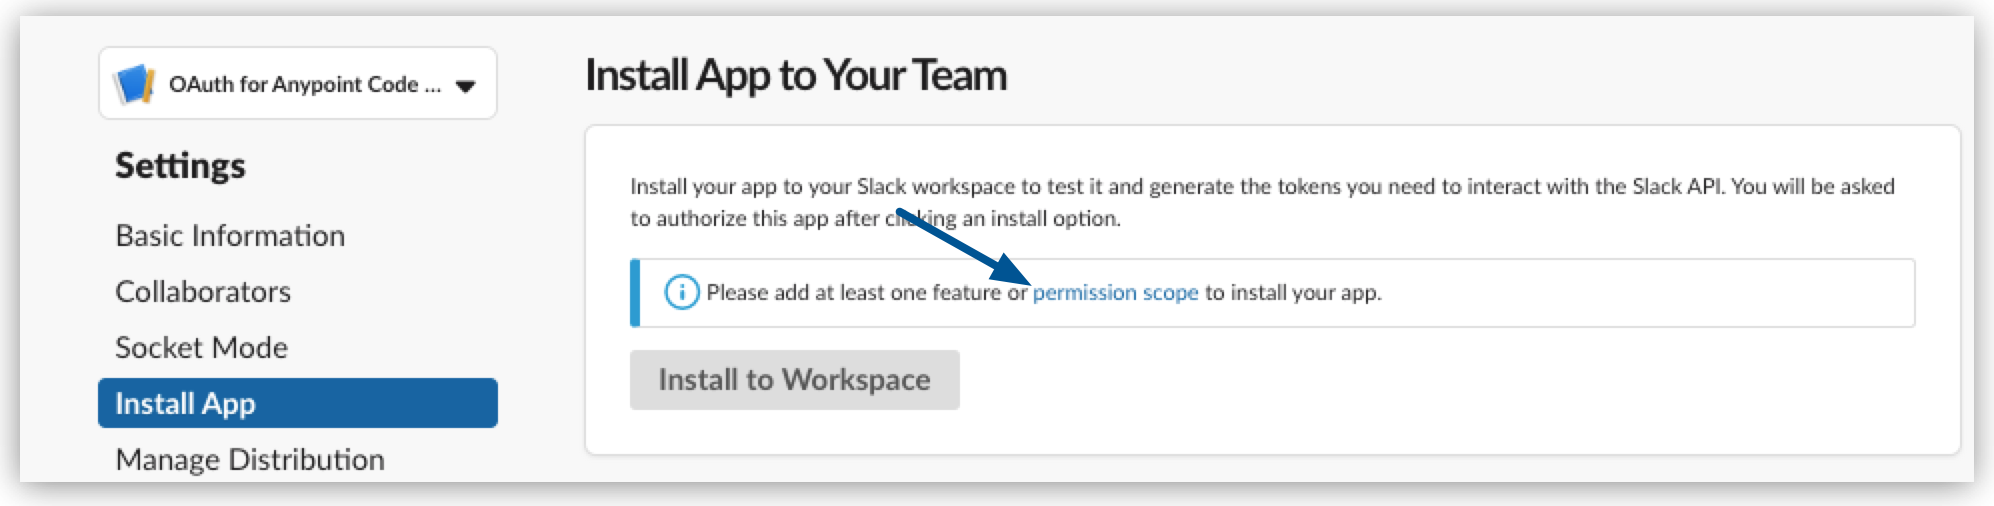 slack install permission scope